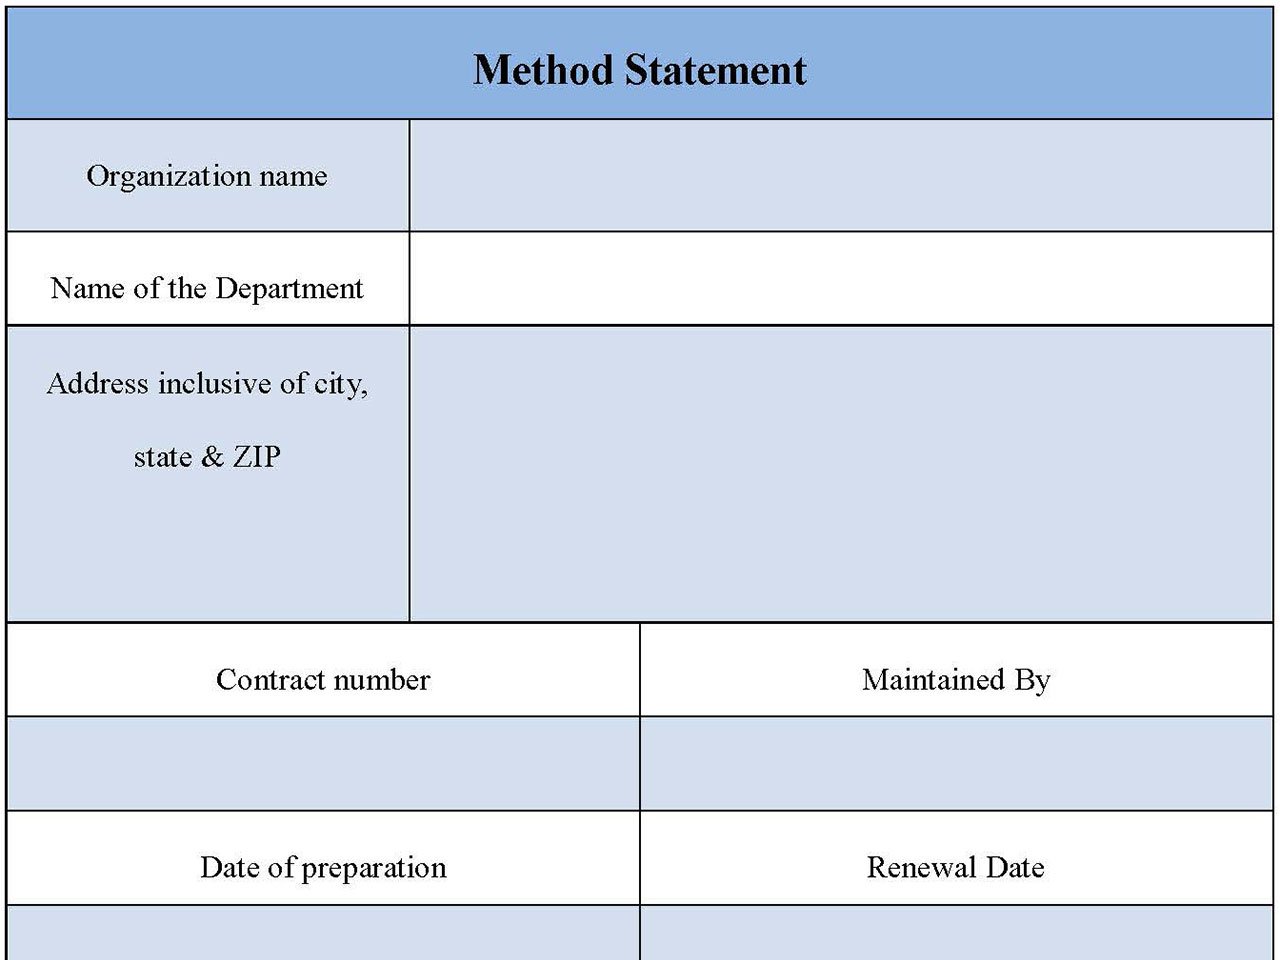 Method Statement Form